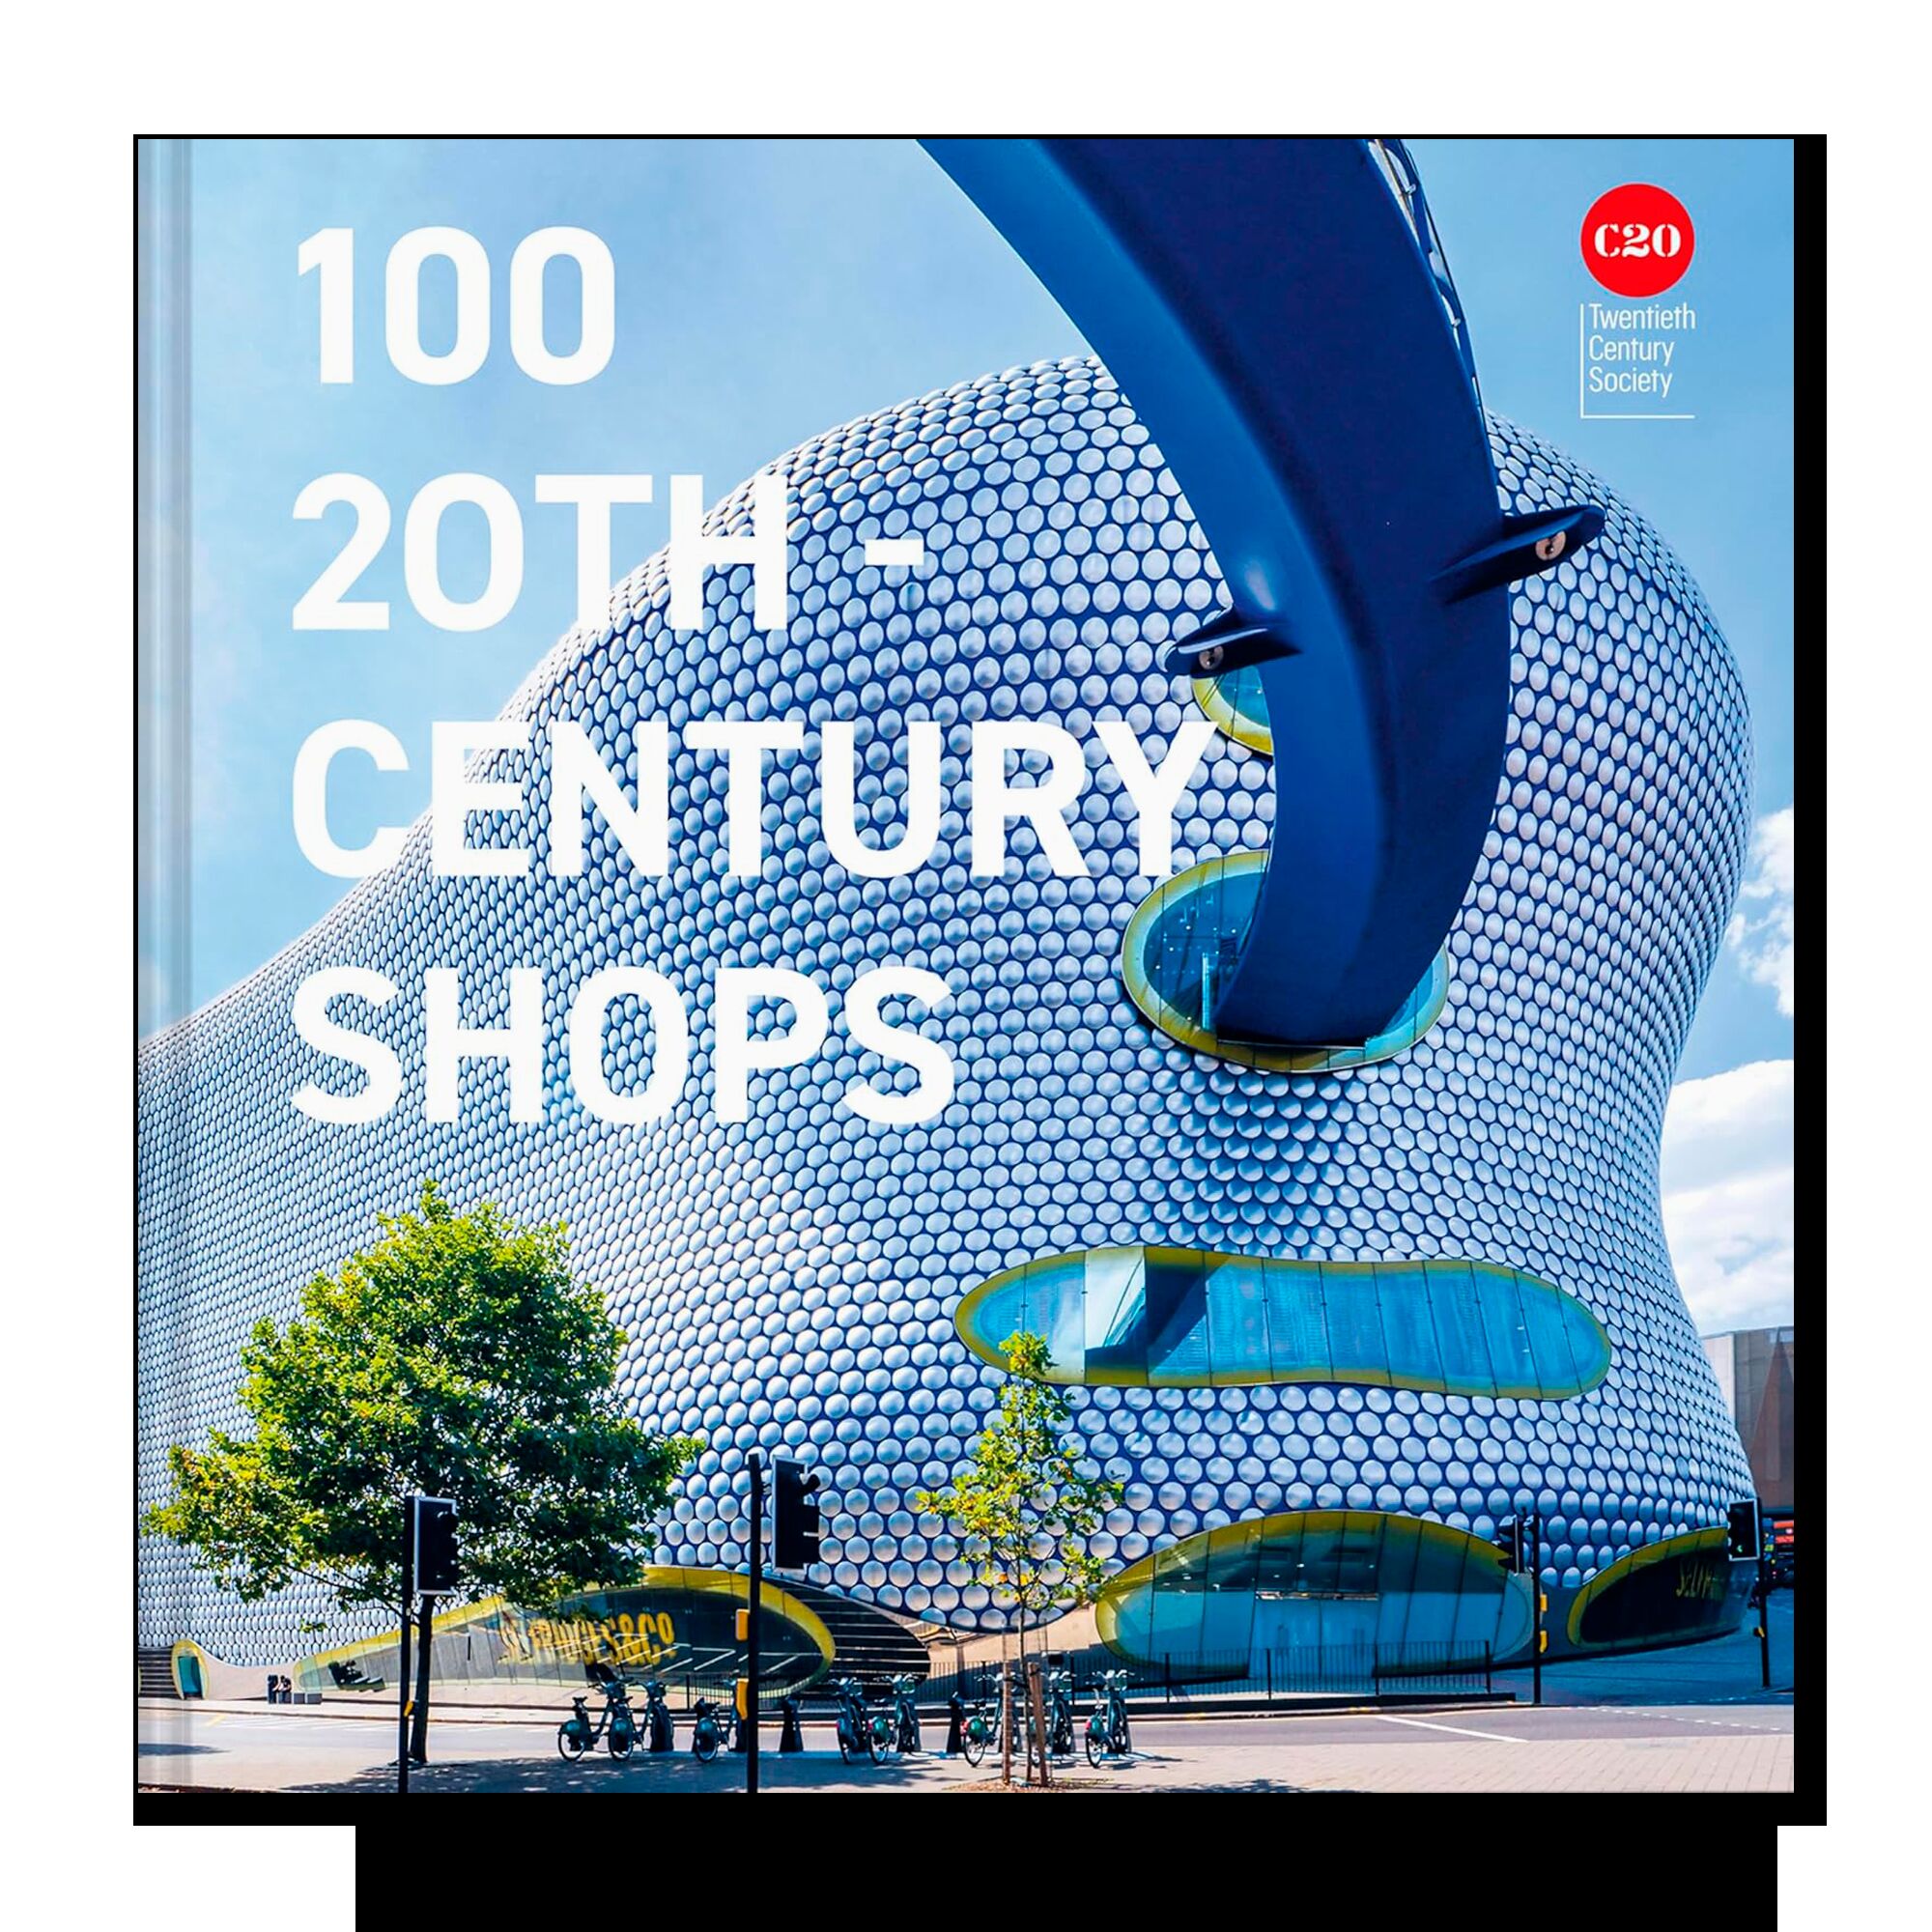 100 20th-Century Shops